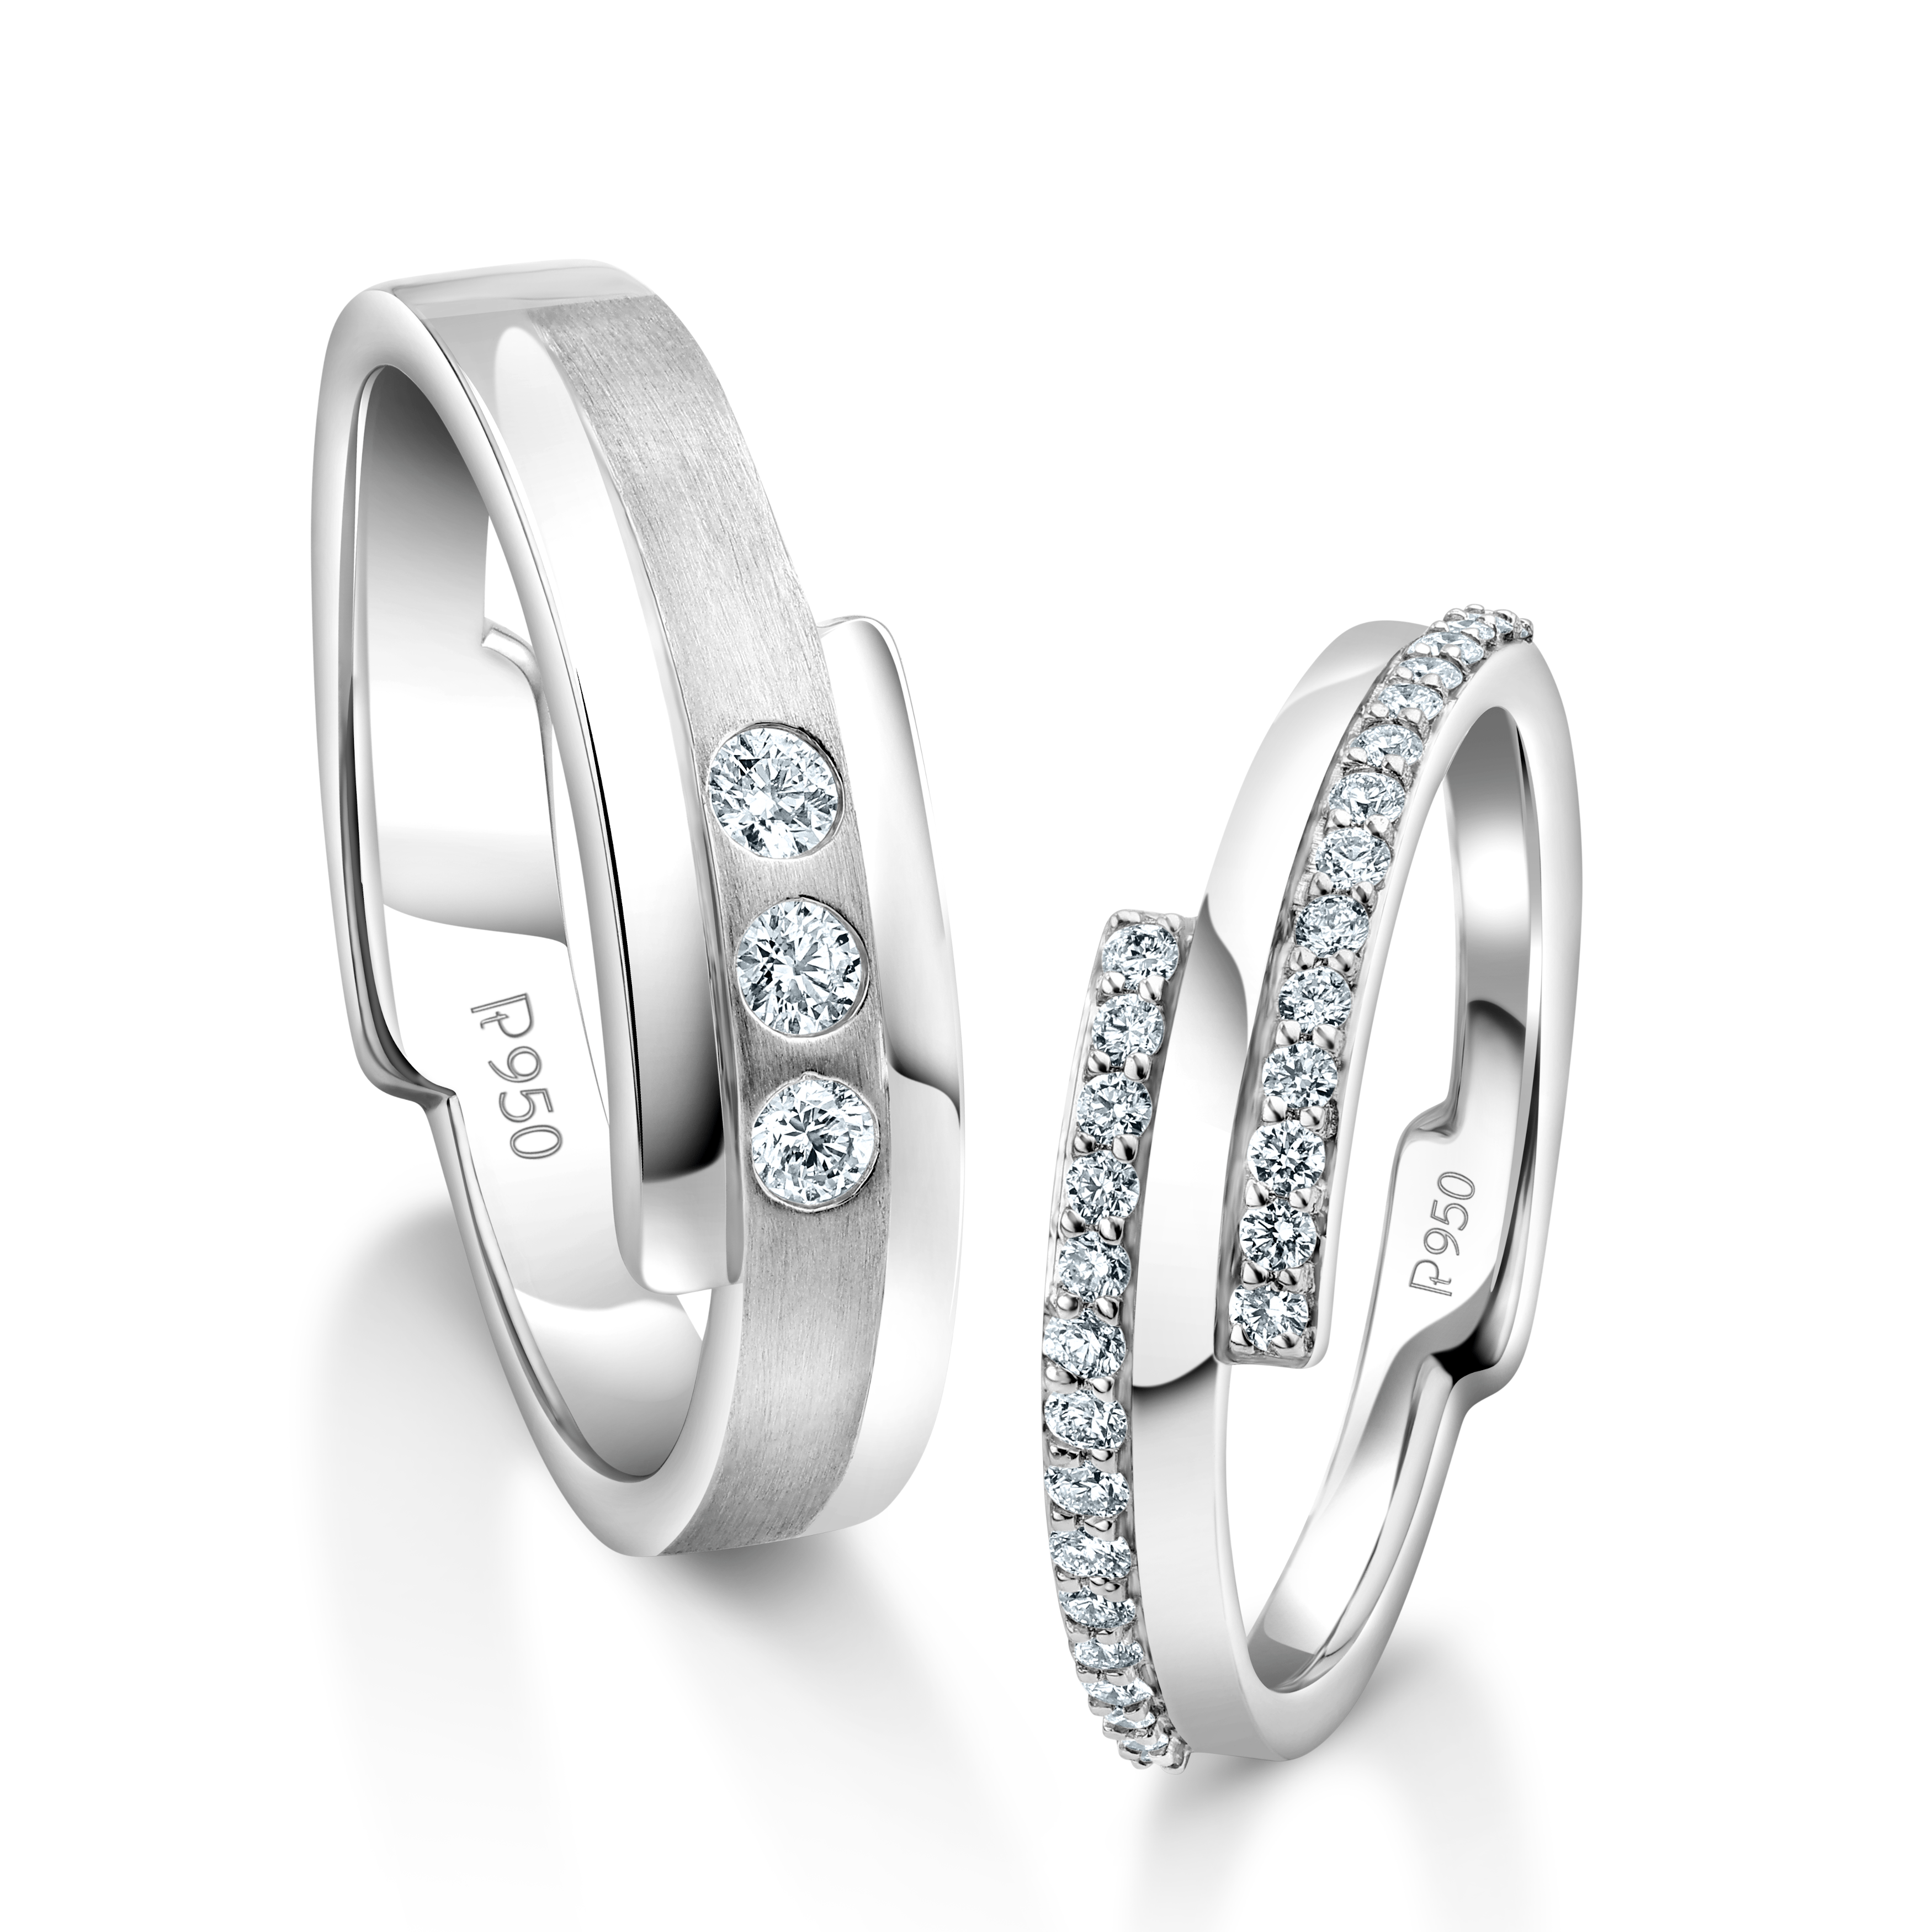 18kt Designer type Diamond Ring Price in Kerala | Lowest Rate